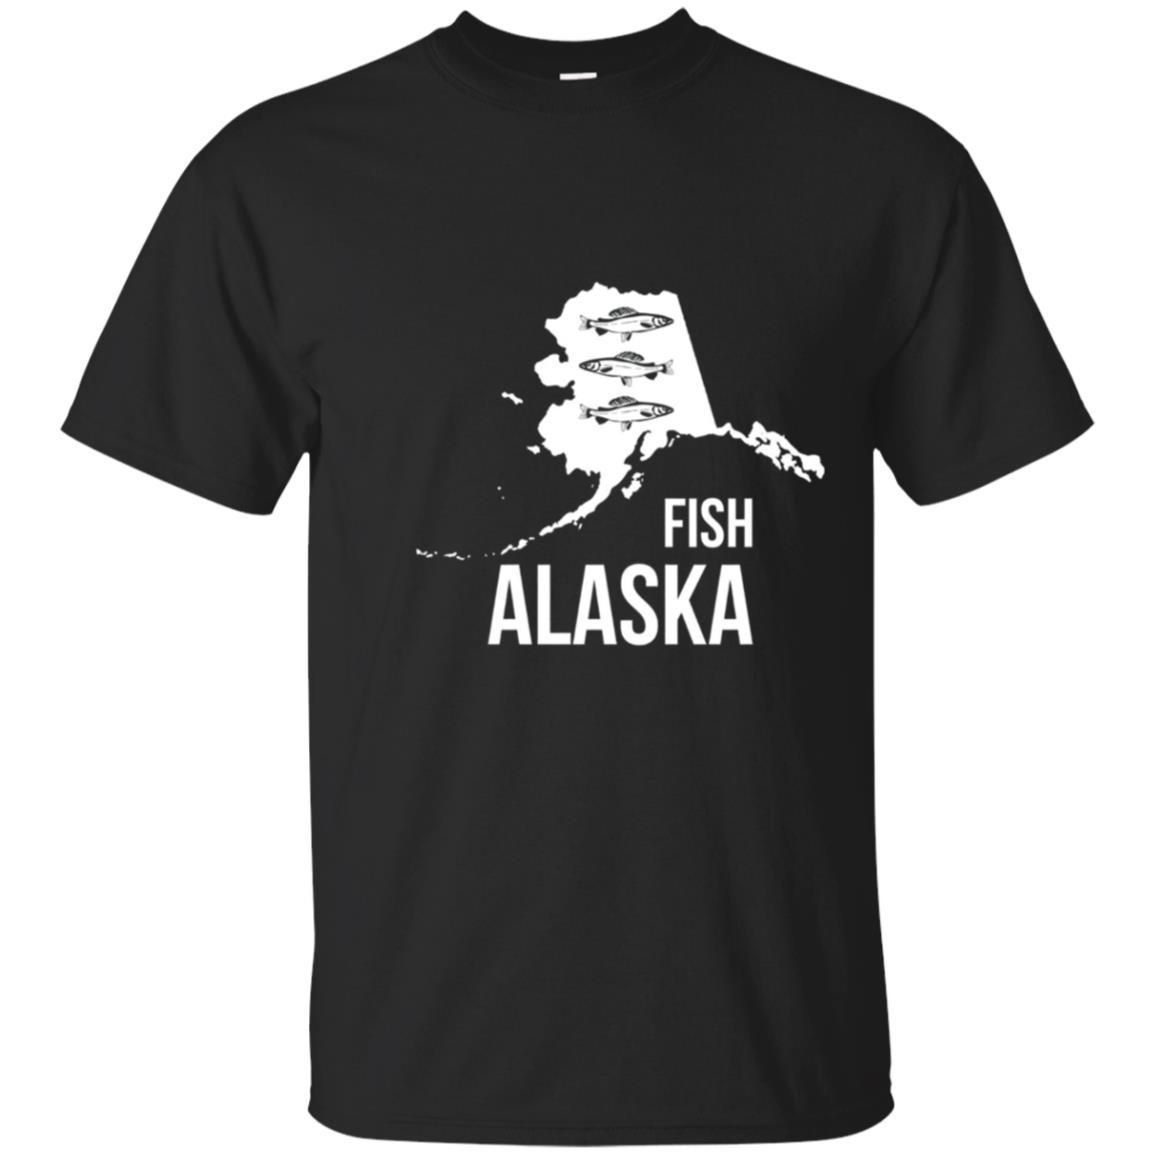 Check Out This Awesome Fish Alaska Fishing T-shirt | Funny Fishing Apparel